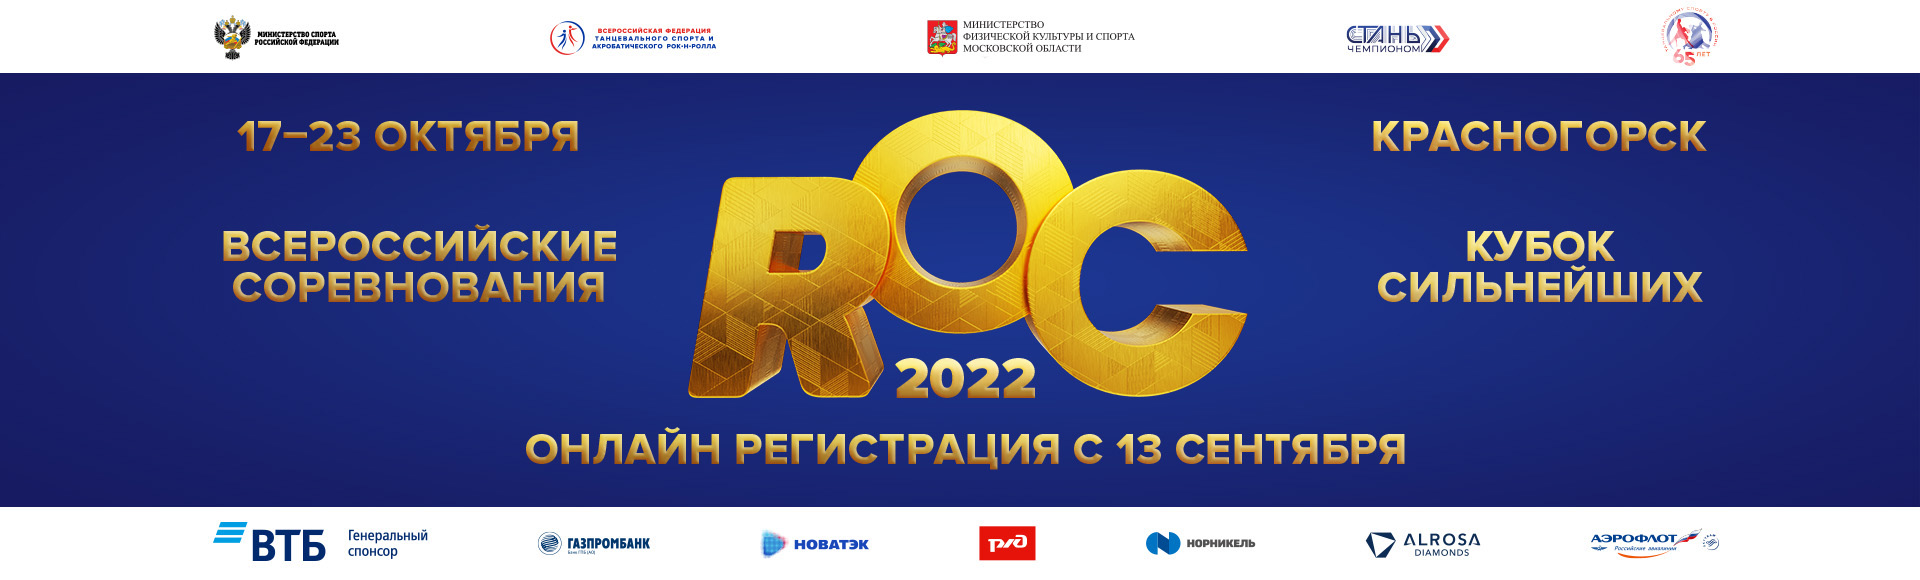 ROC-2022